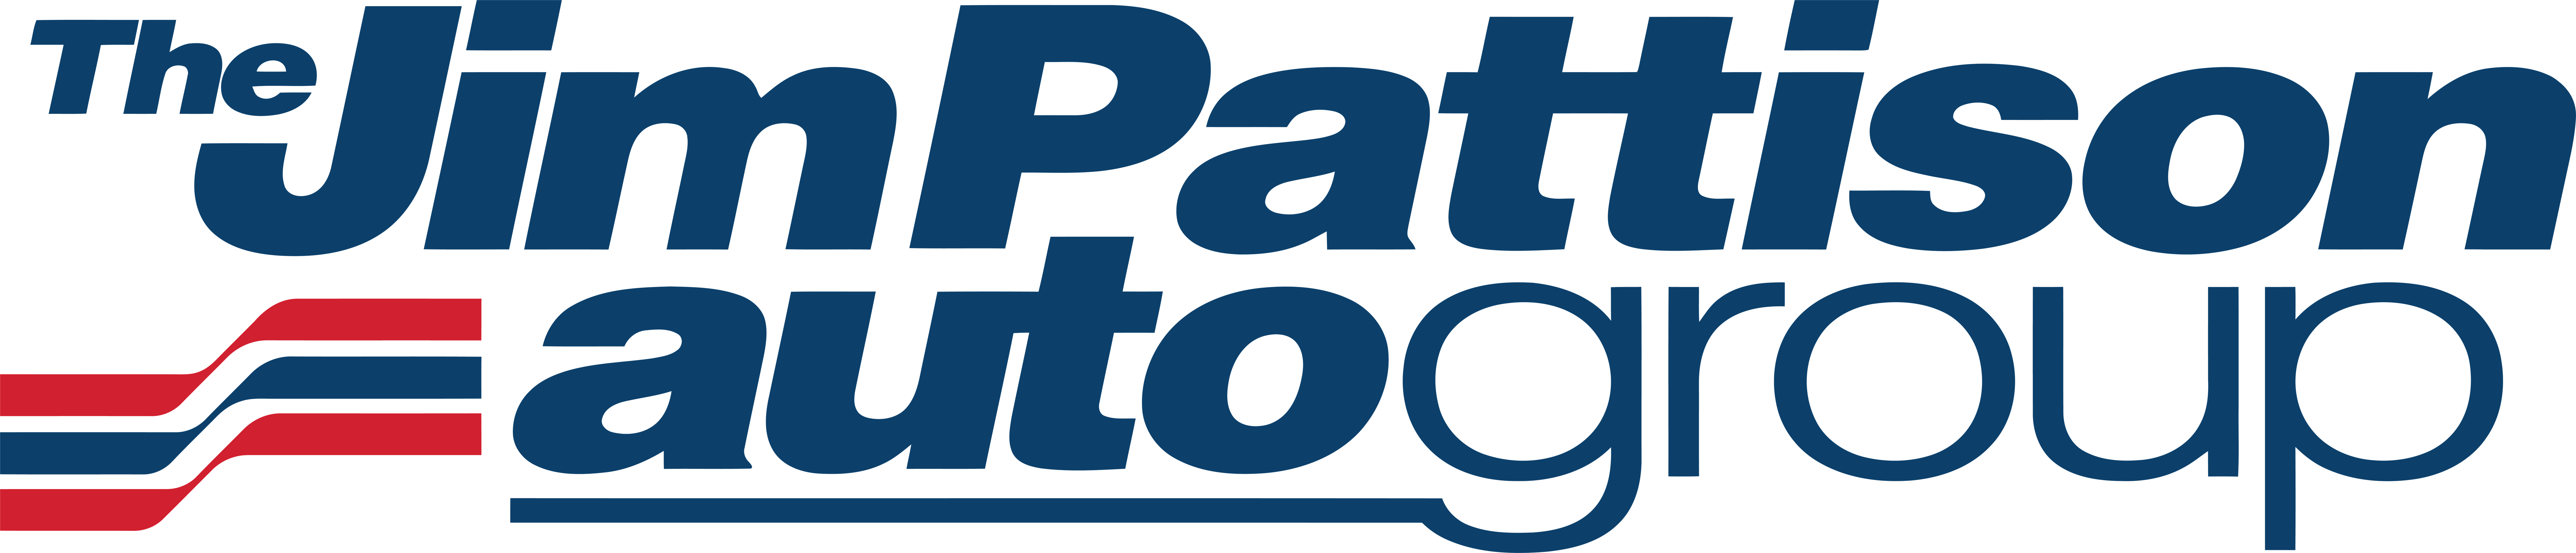 Jim Pattison Auto Group logo